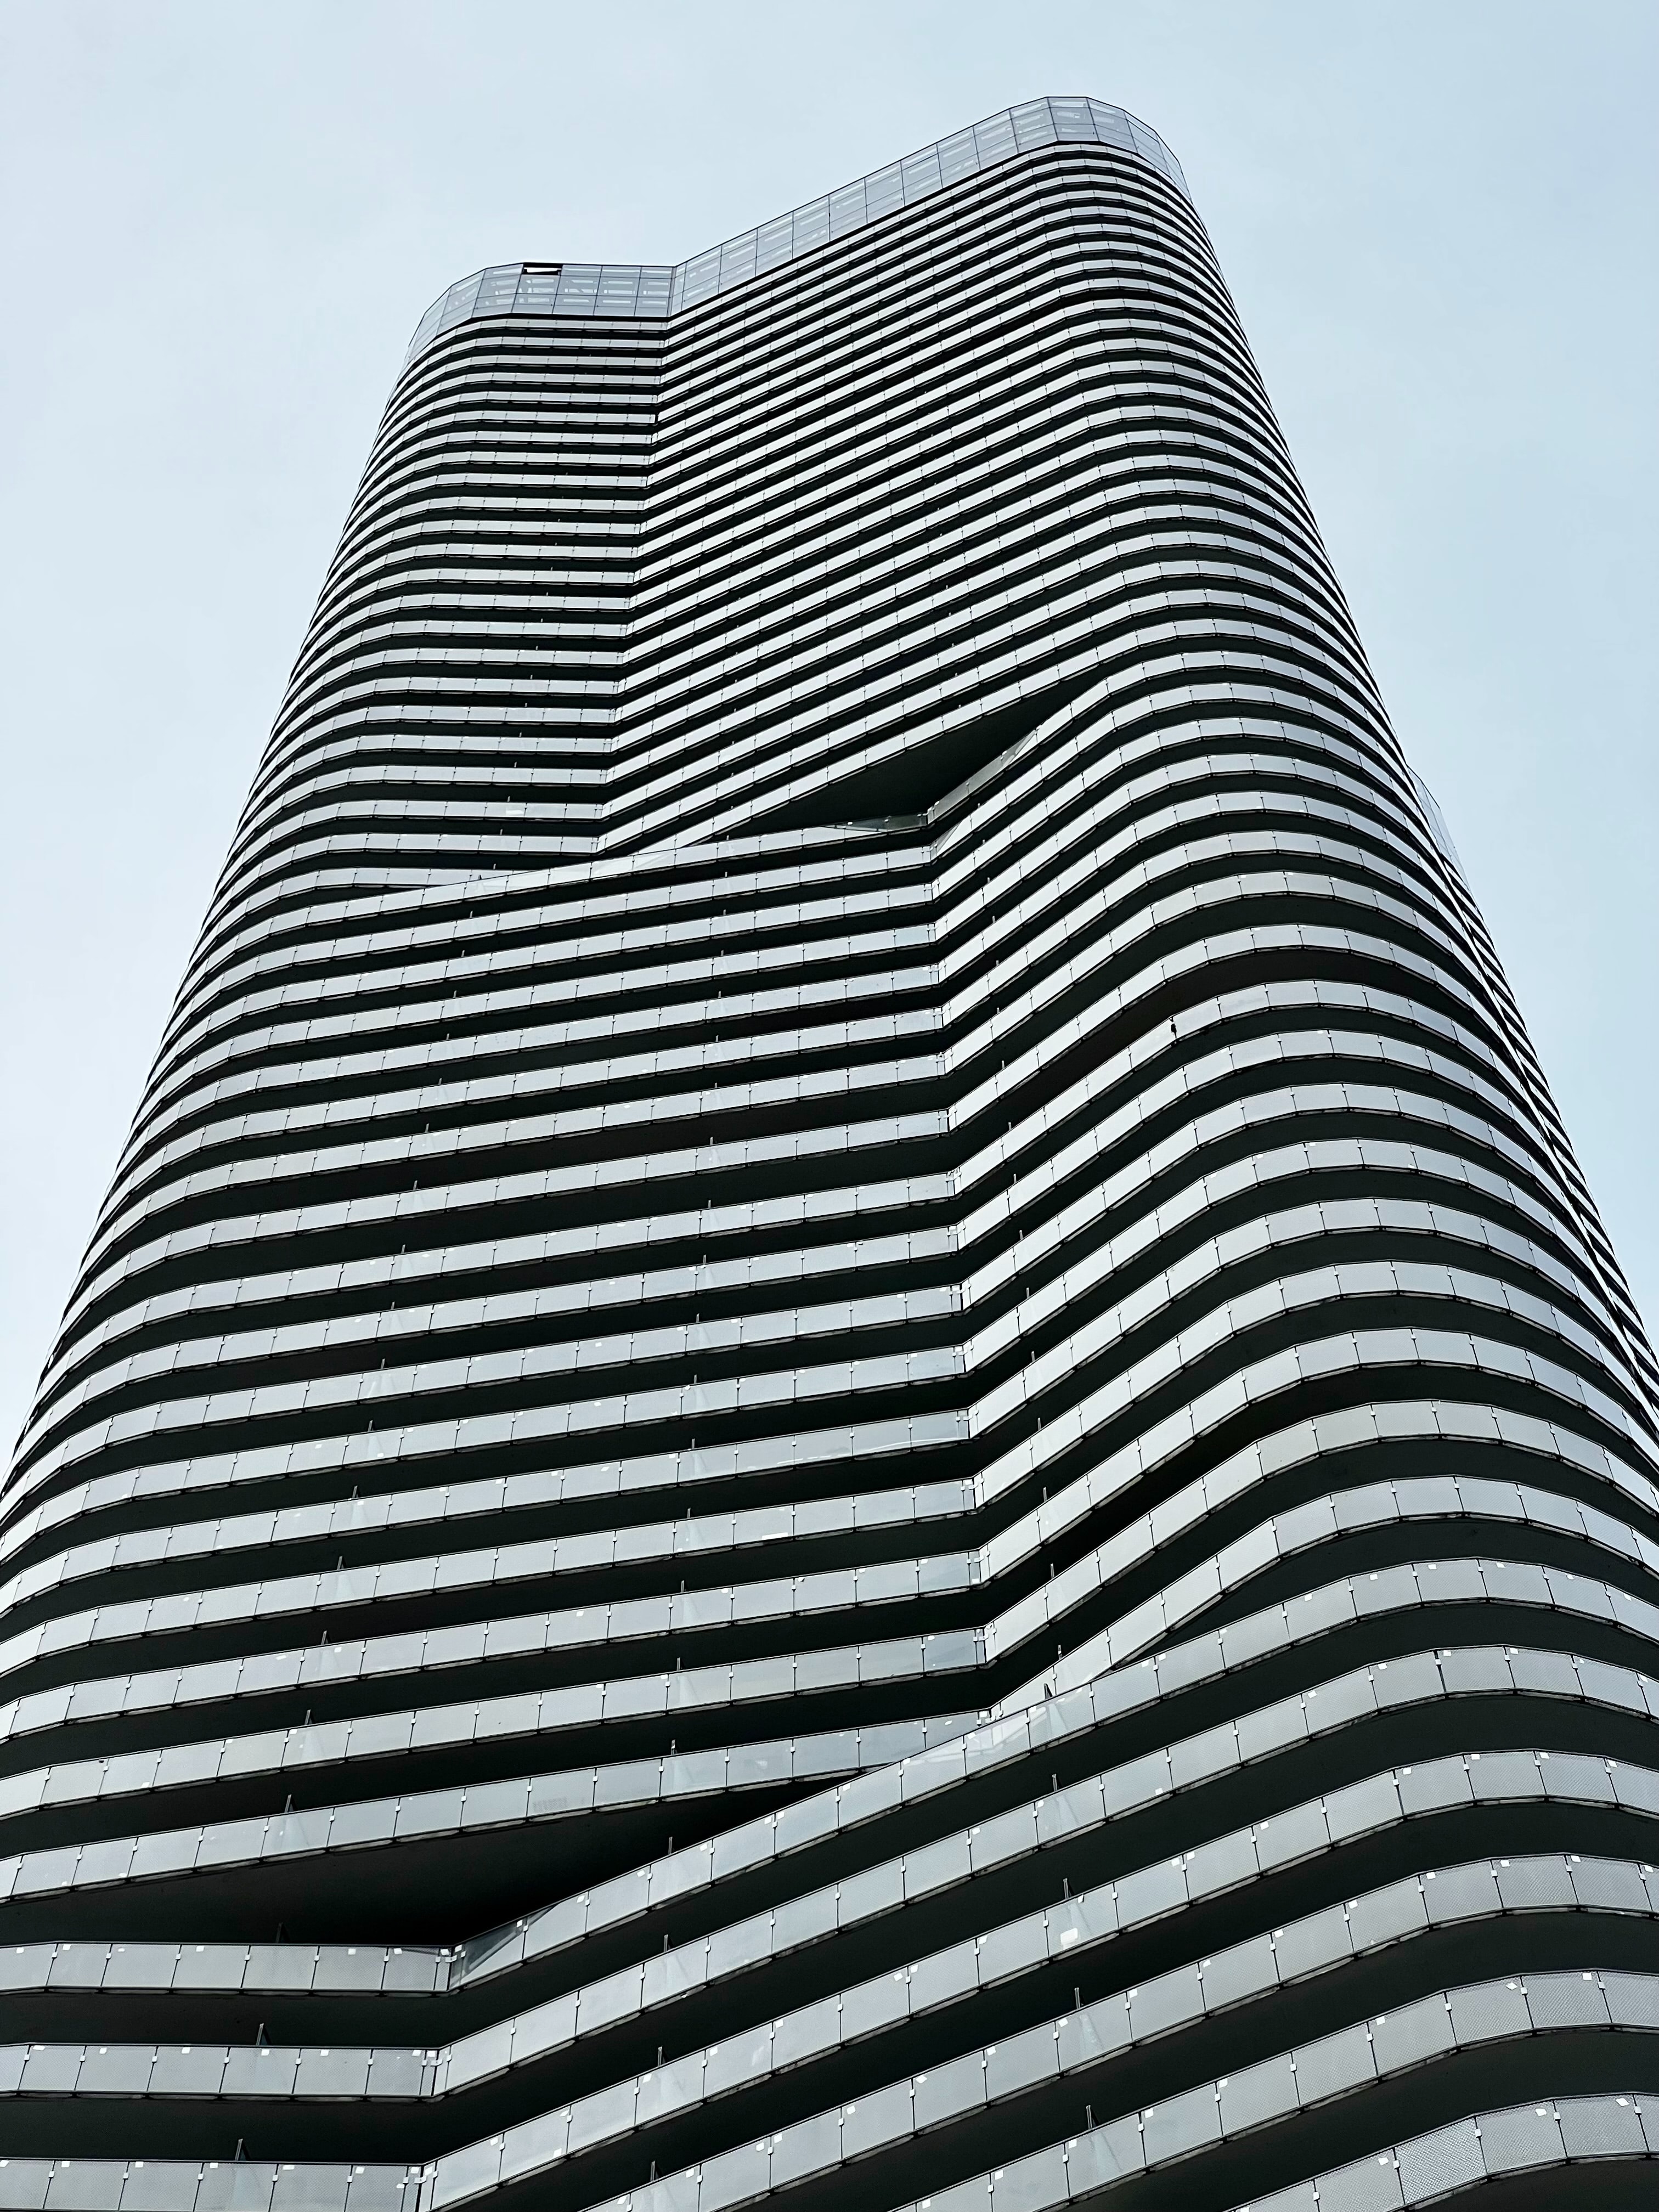 photo of toronto building, source is https://unsplash.com/photos/ribXsPbE9JU